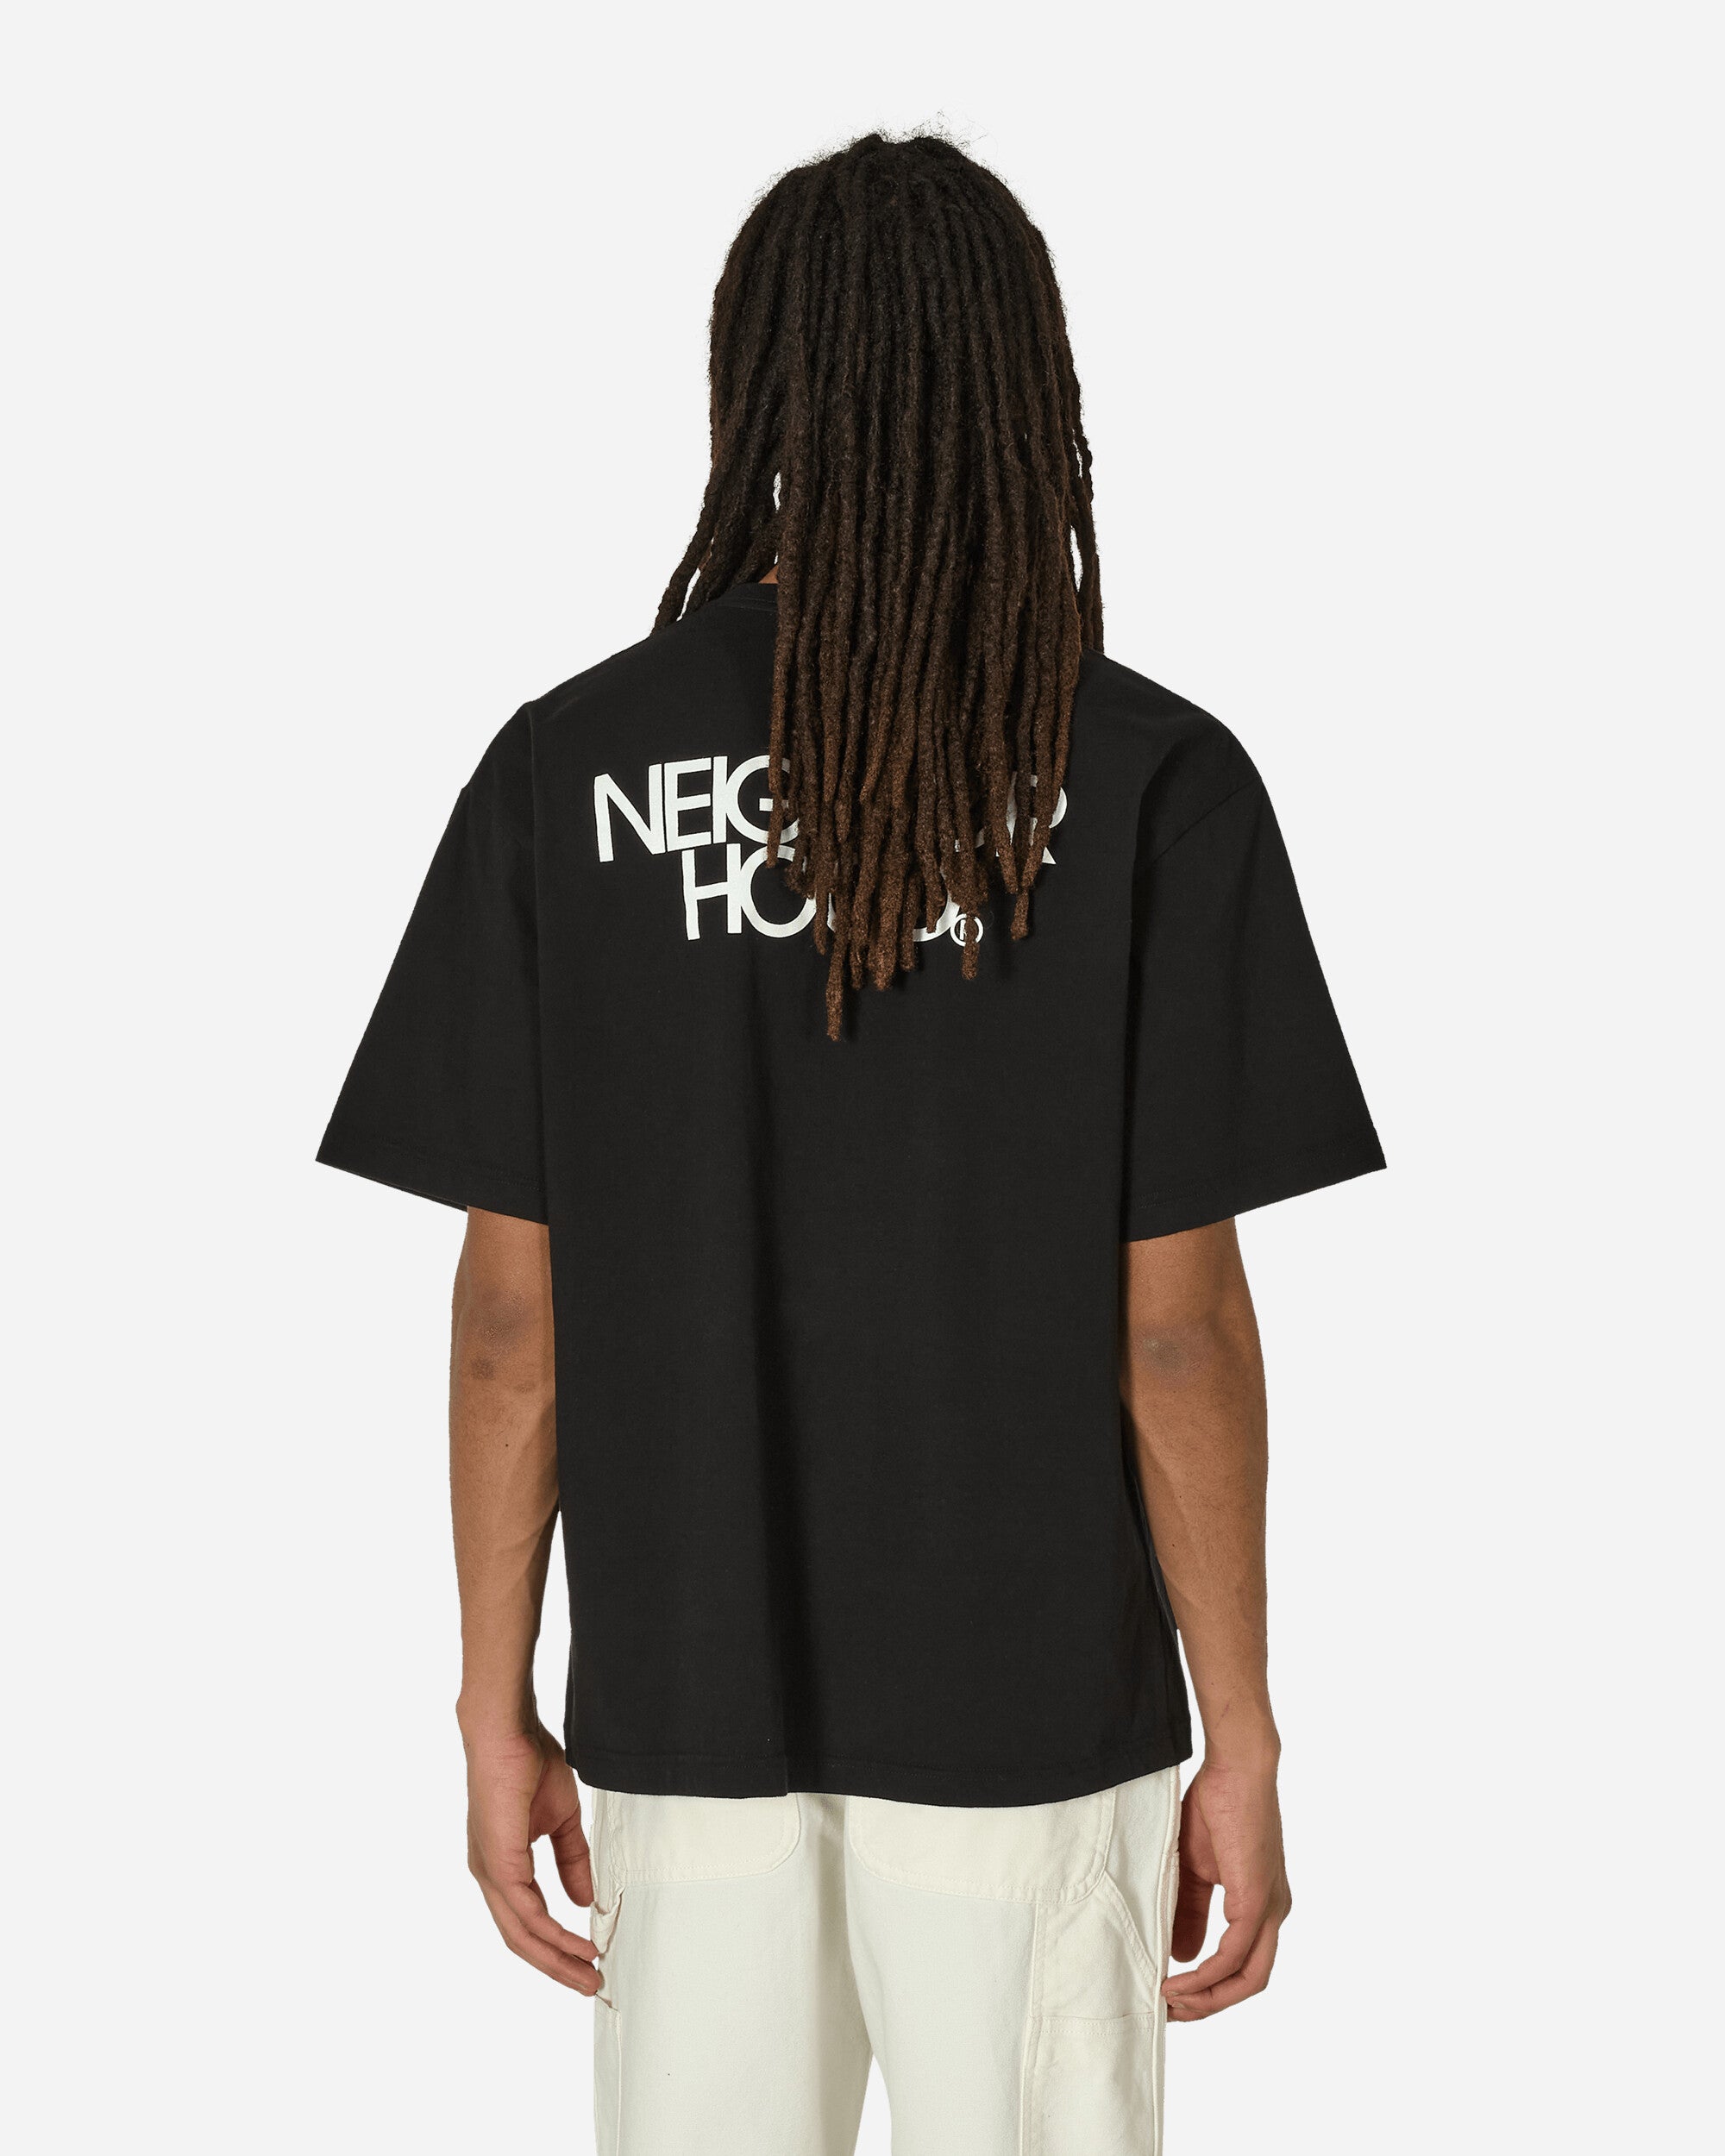 Neighborhood Tee Ss-17 Black T-Shirts Shortsleeve 241PCNH-ST17 BK